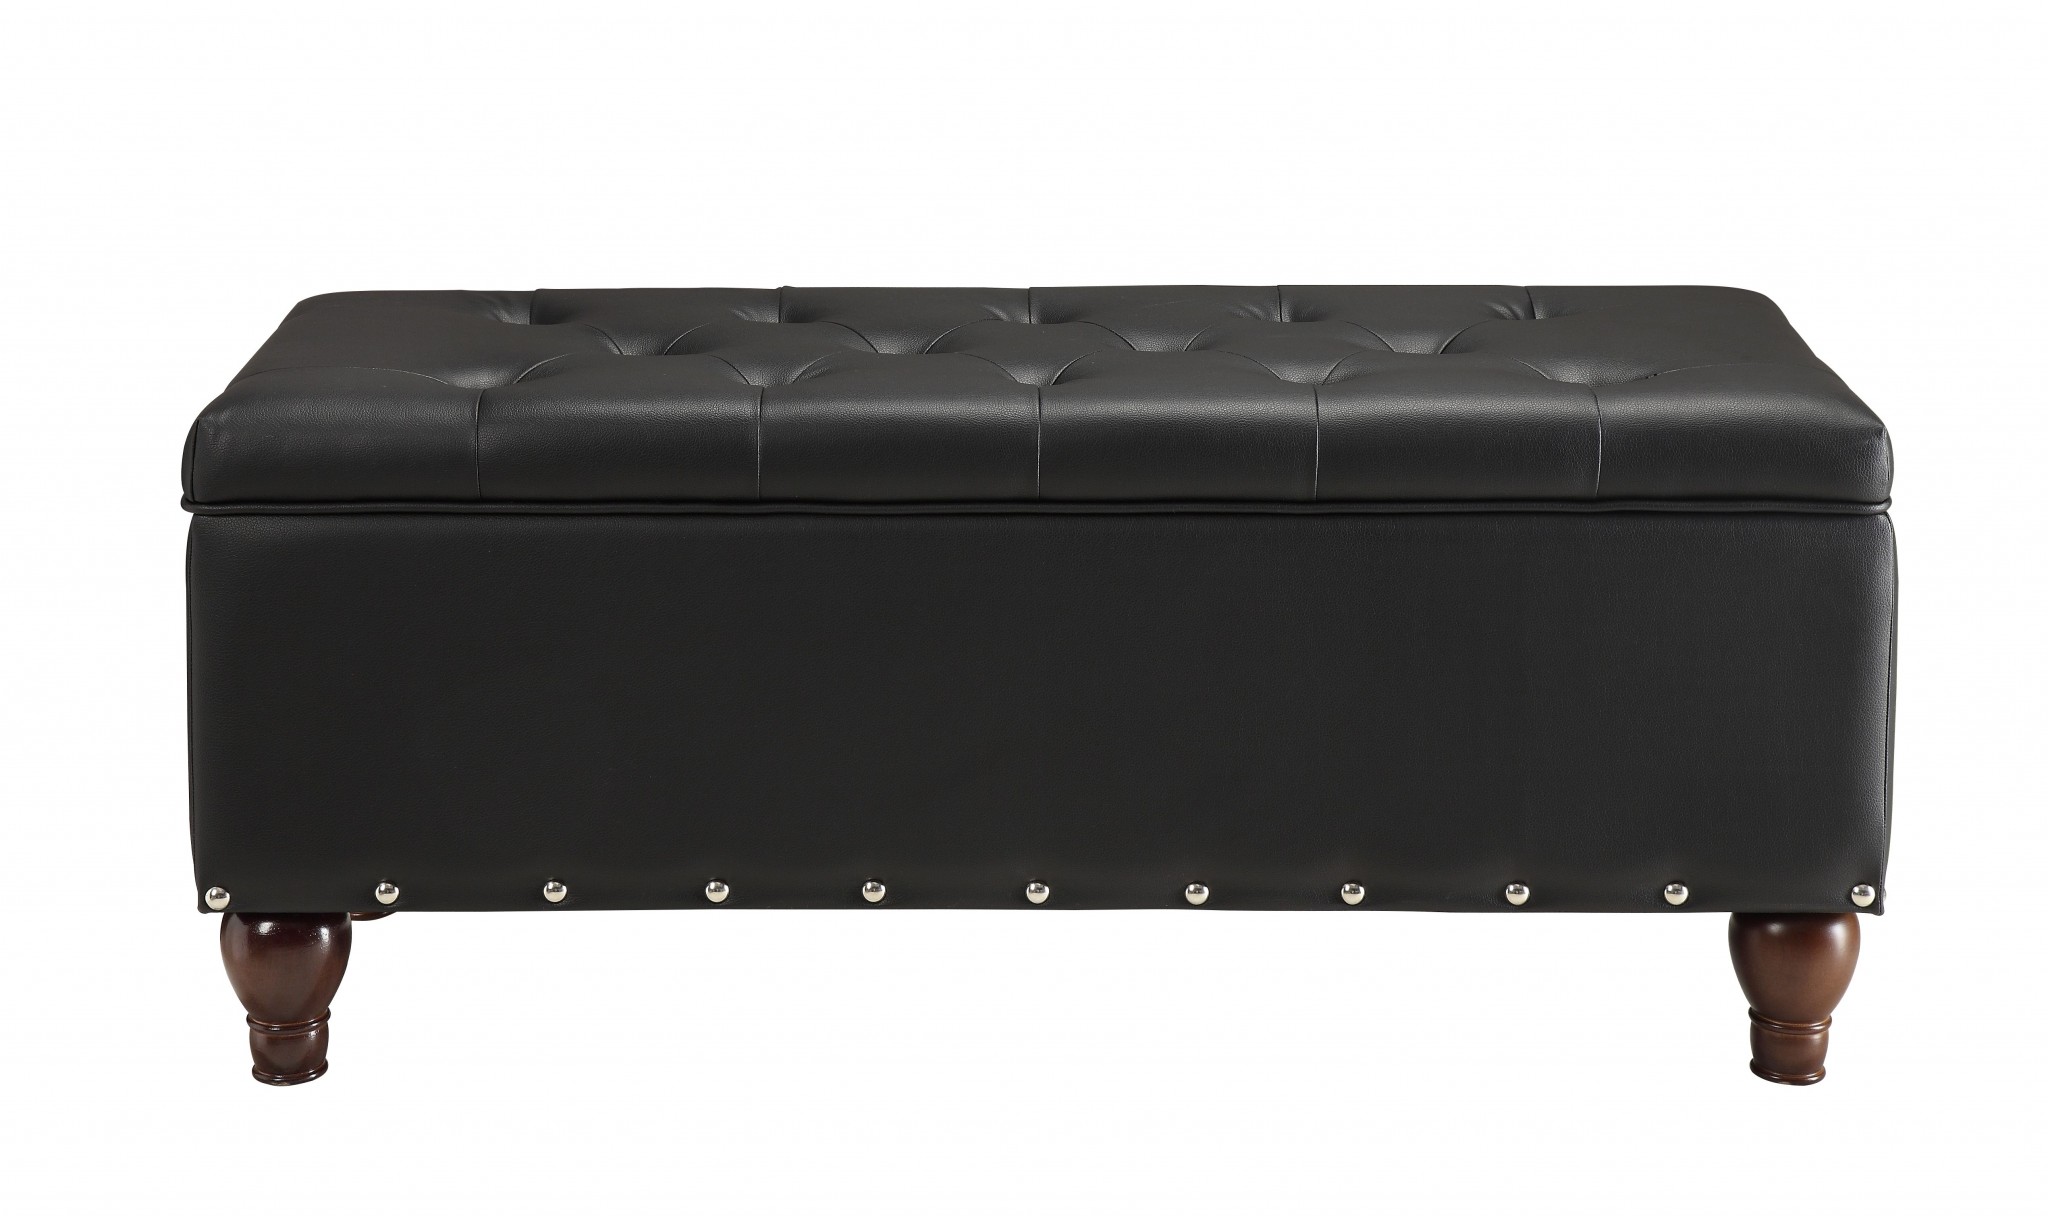 18" X 42" X 18" Black PU Upholstery Wood Leg Bench w/Storage